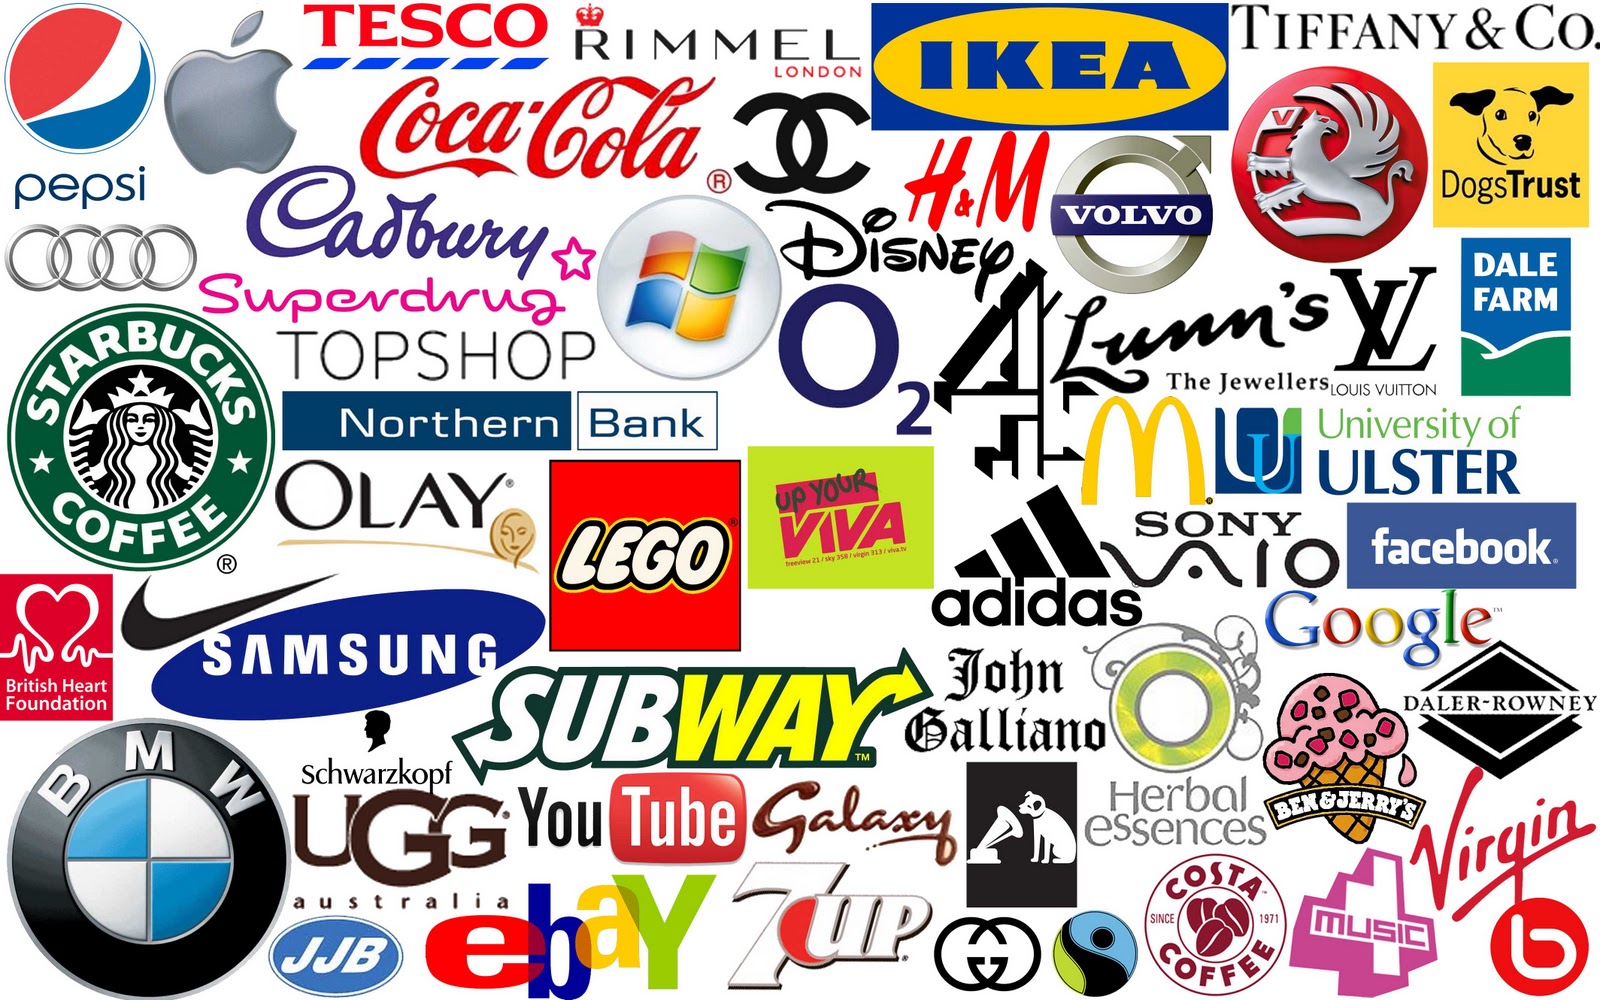 company logos and names